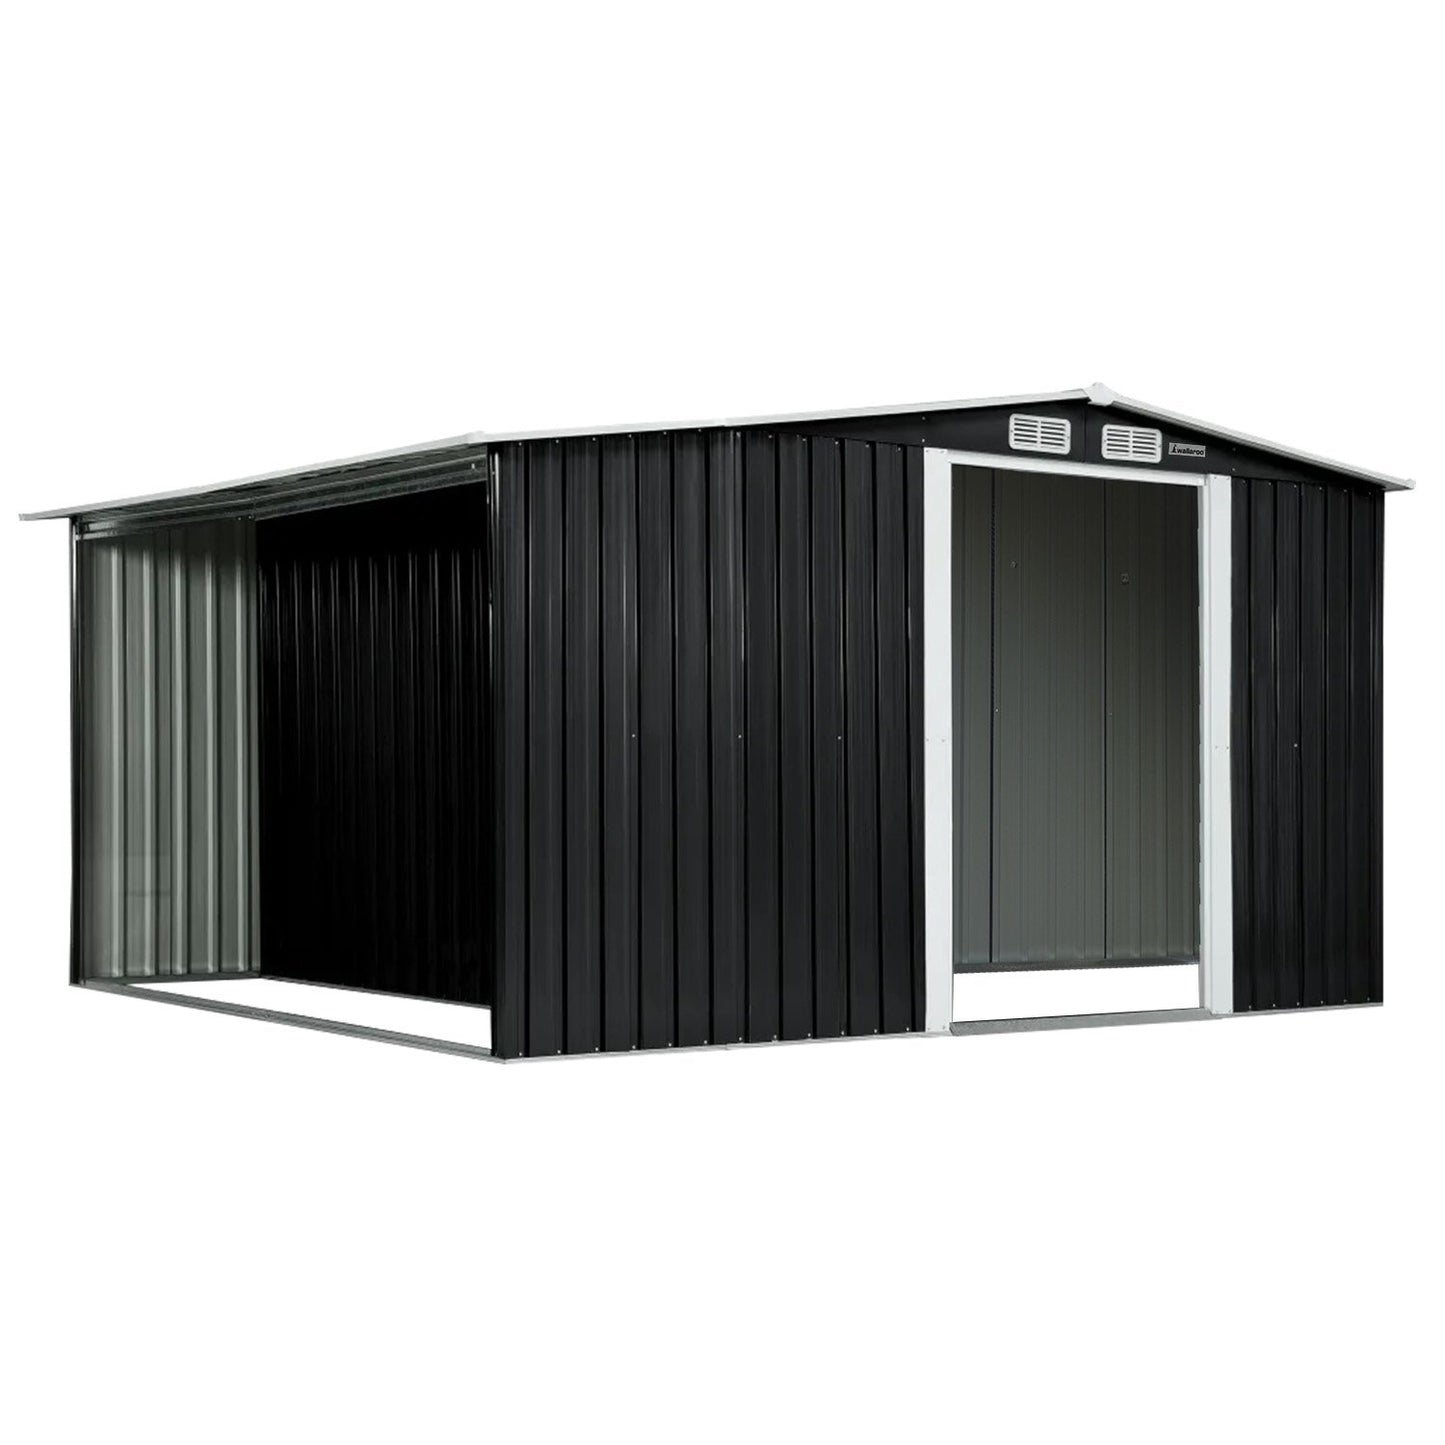 Wallaroo Garden Shed with Semi-Close Storage 6*8FT - Black